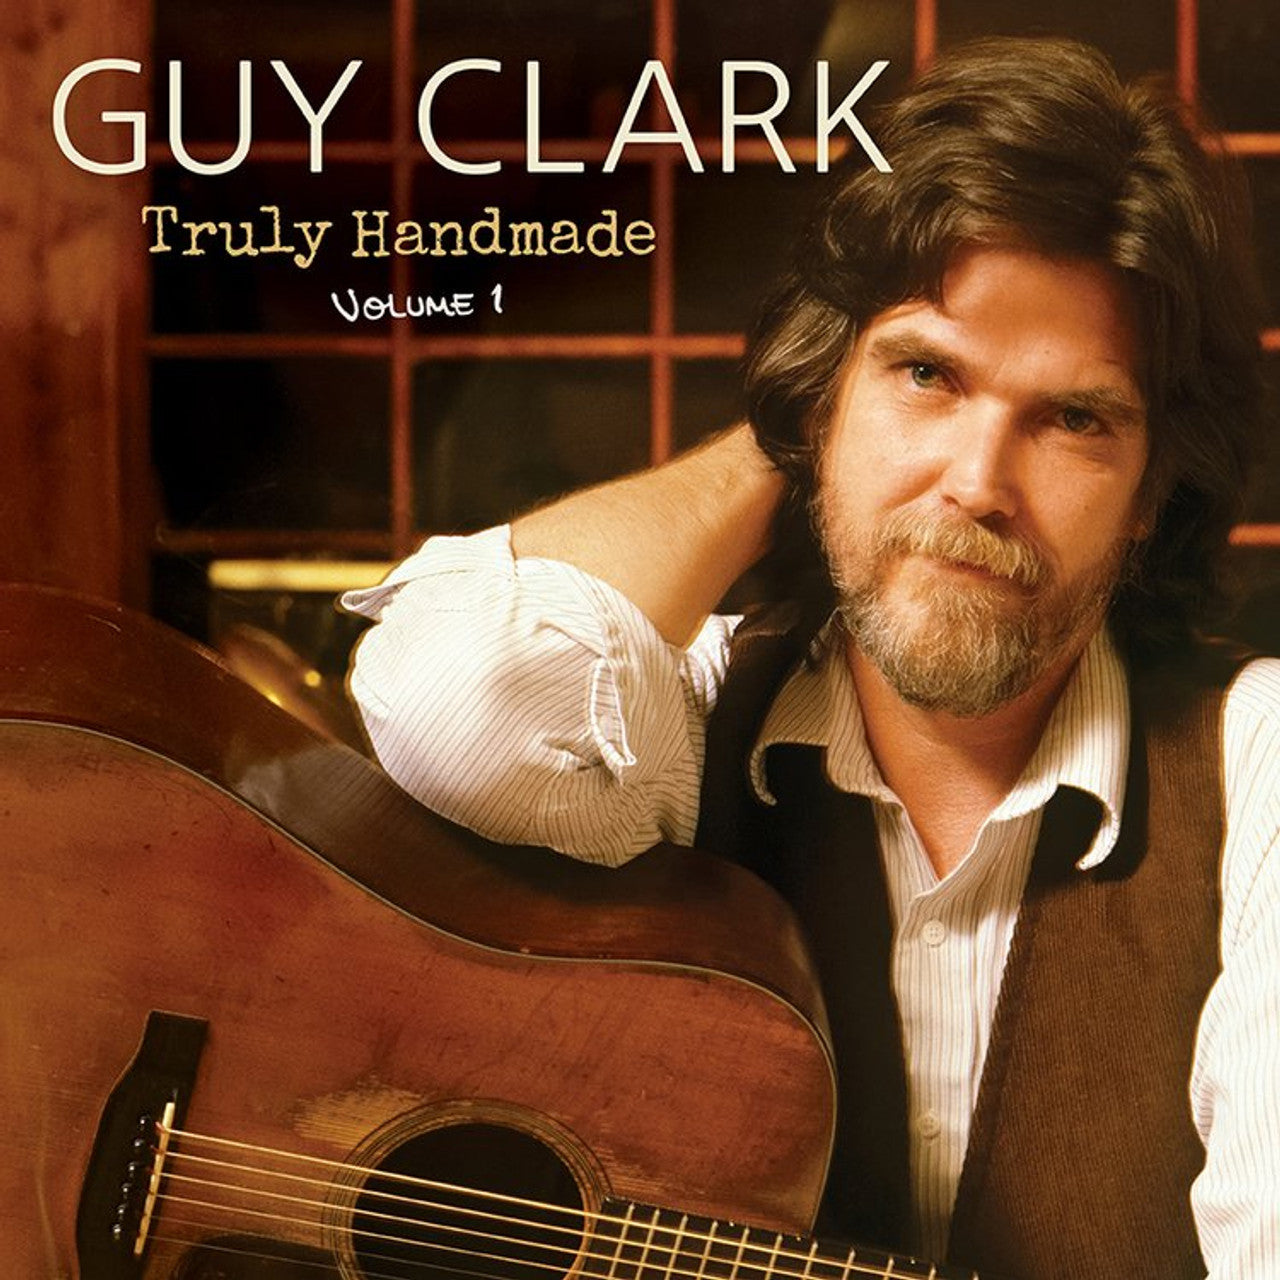 Clark, Guy "Truly Handmade Volume 1"